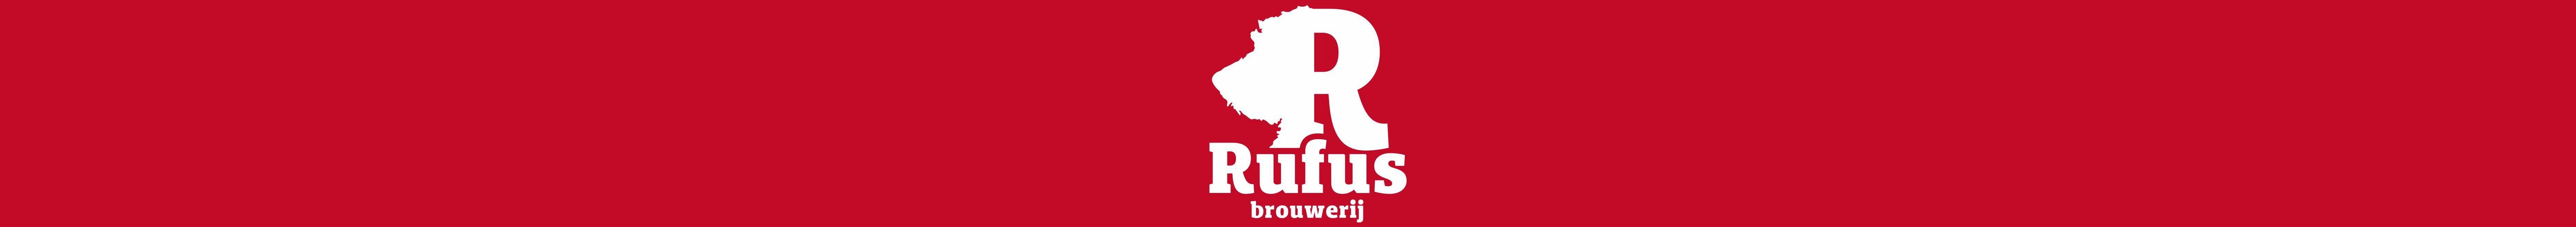 Brouwerij Rufus